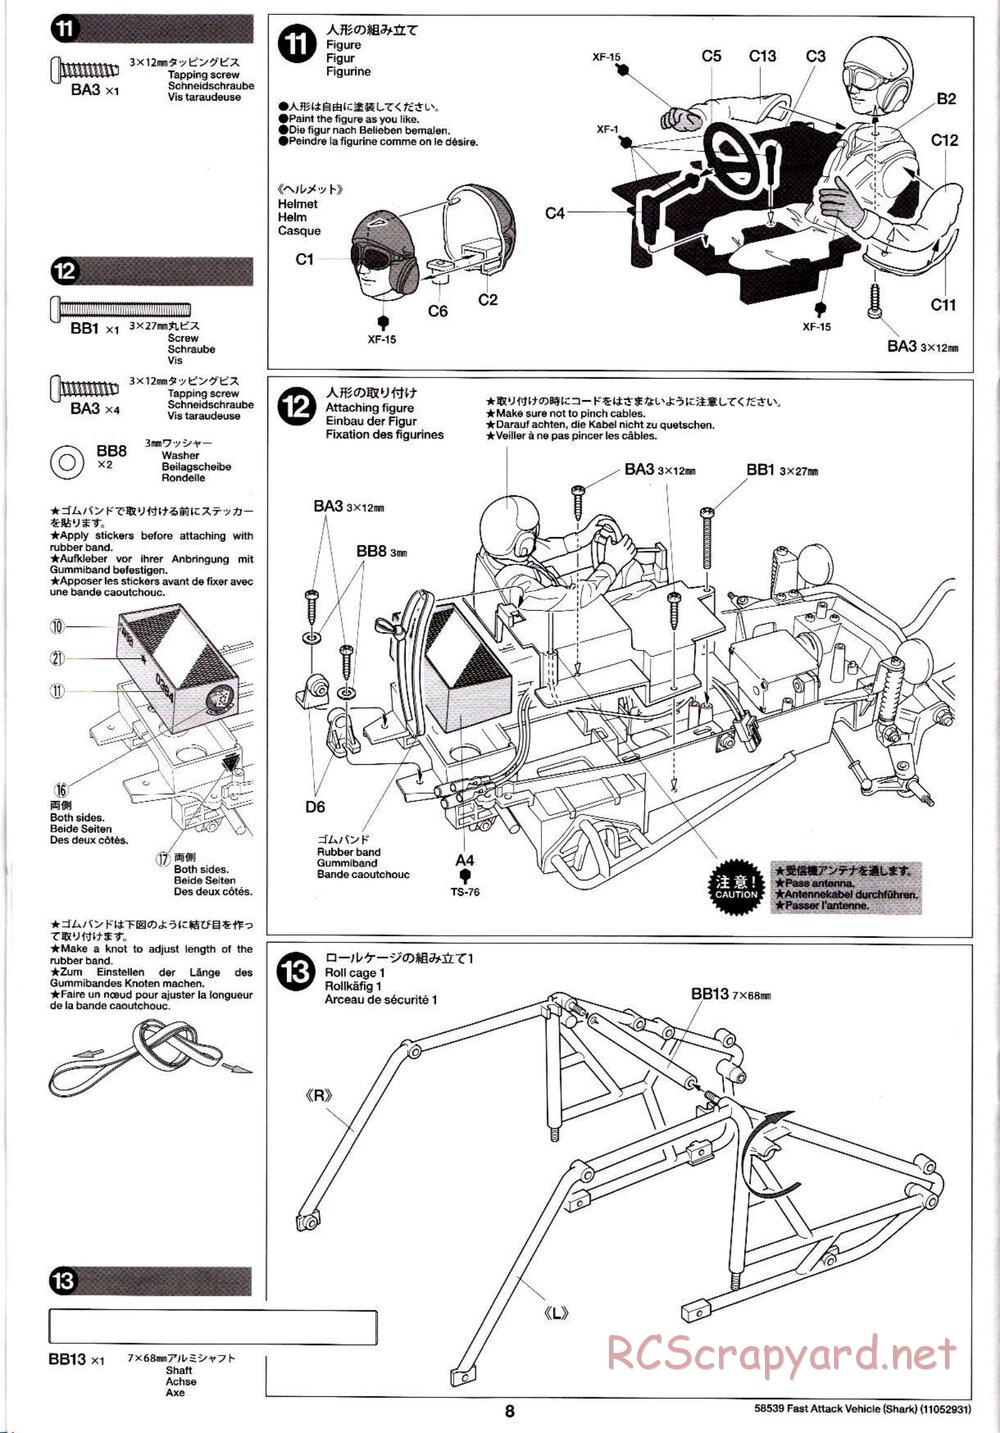 Tamiya - Fast Attack Vehicle w/ Shark Mouth - FAV Chassis - Manual - Page 8